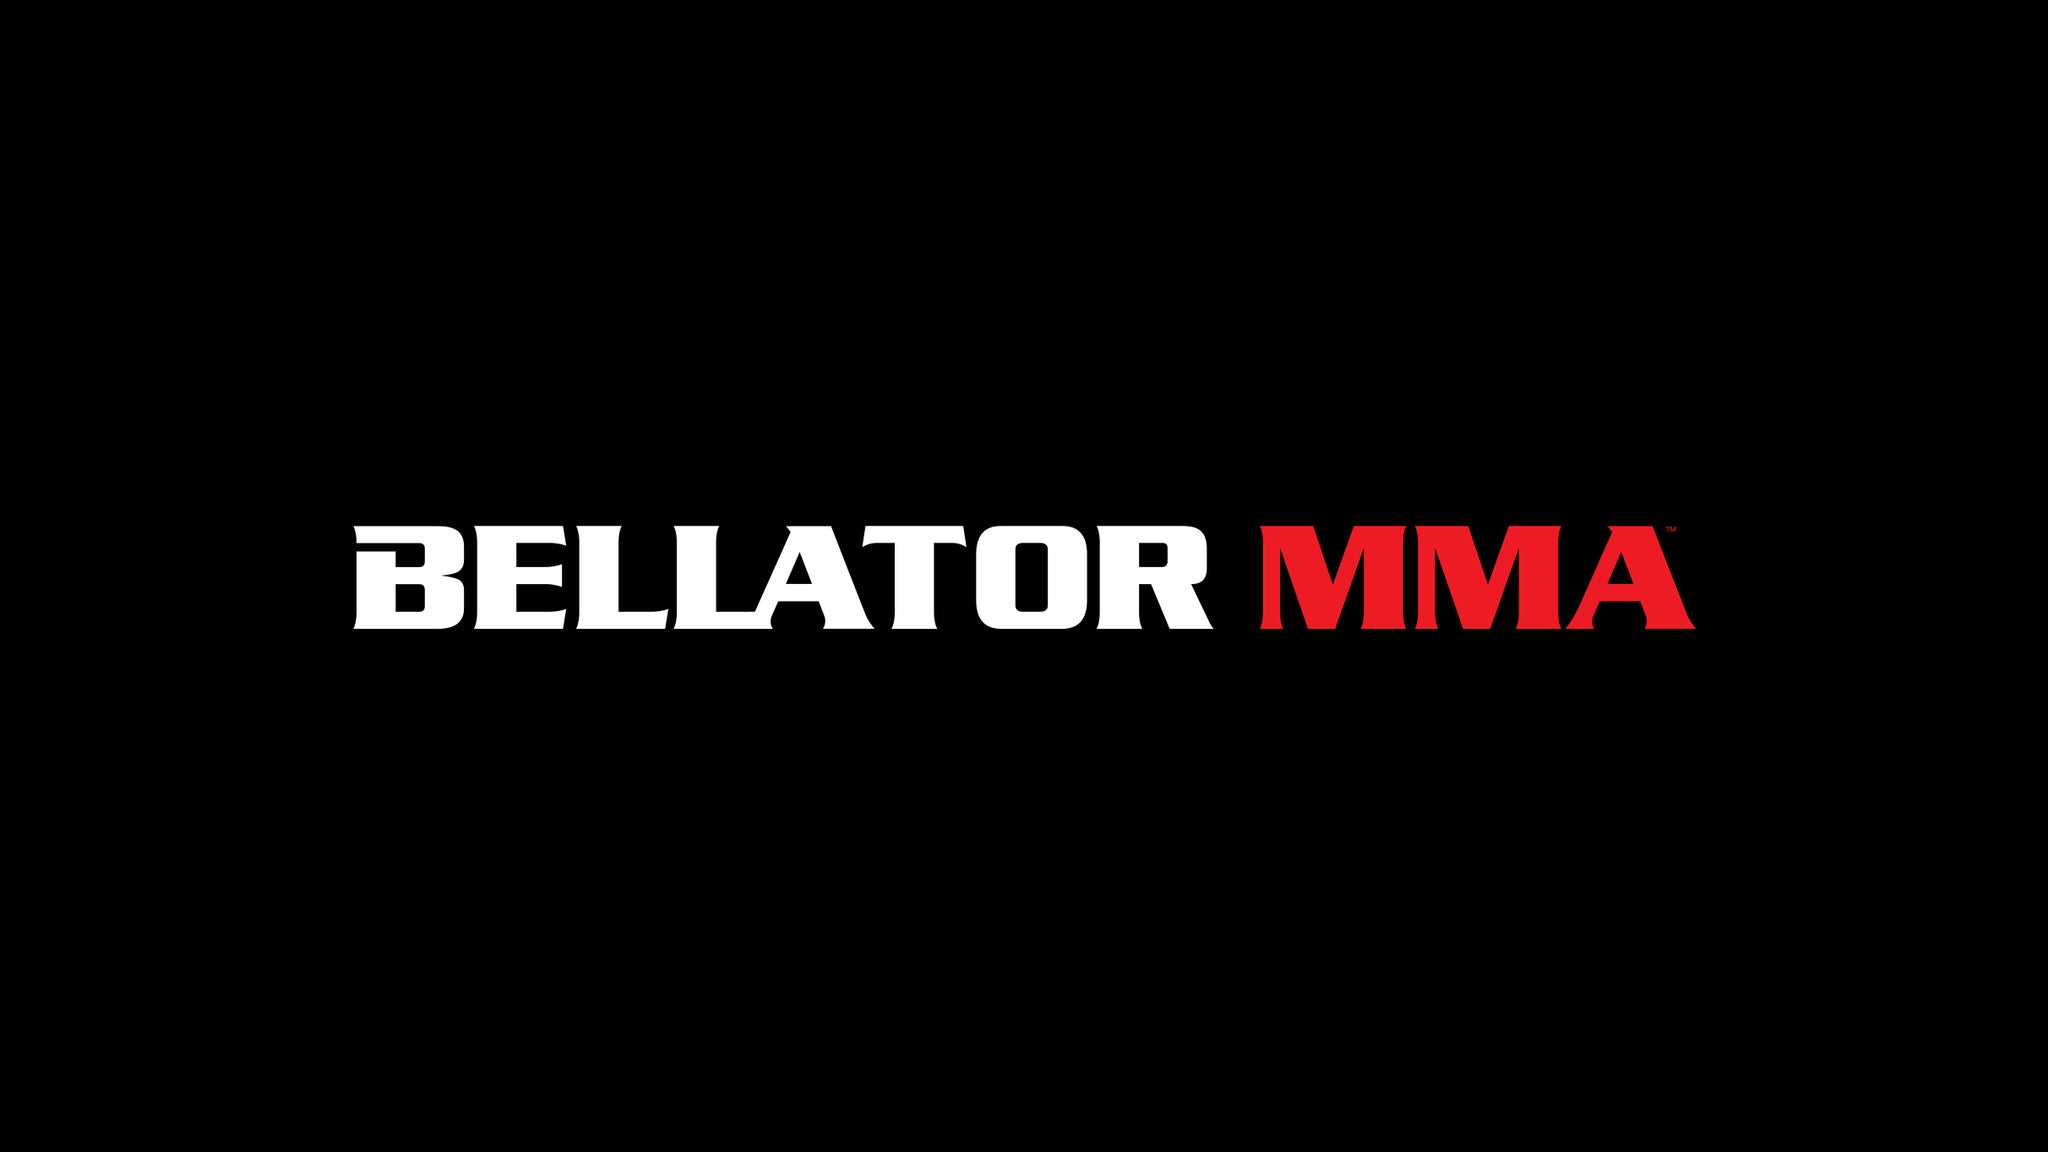 presale password to BELLATOR MMA tickets in Chicago